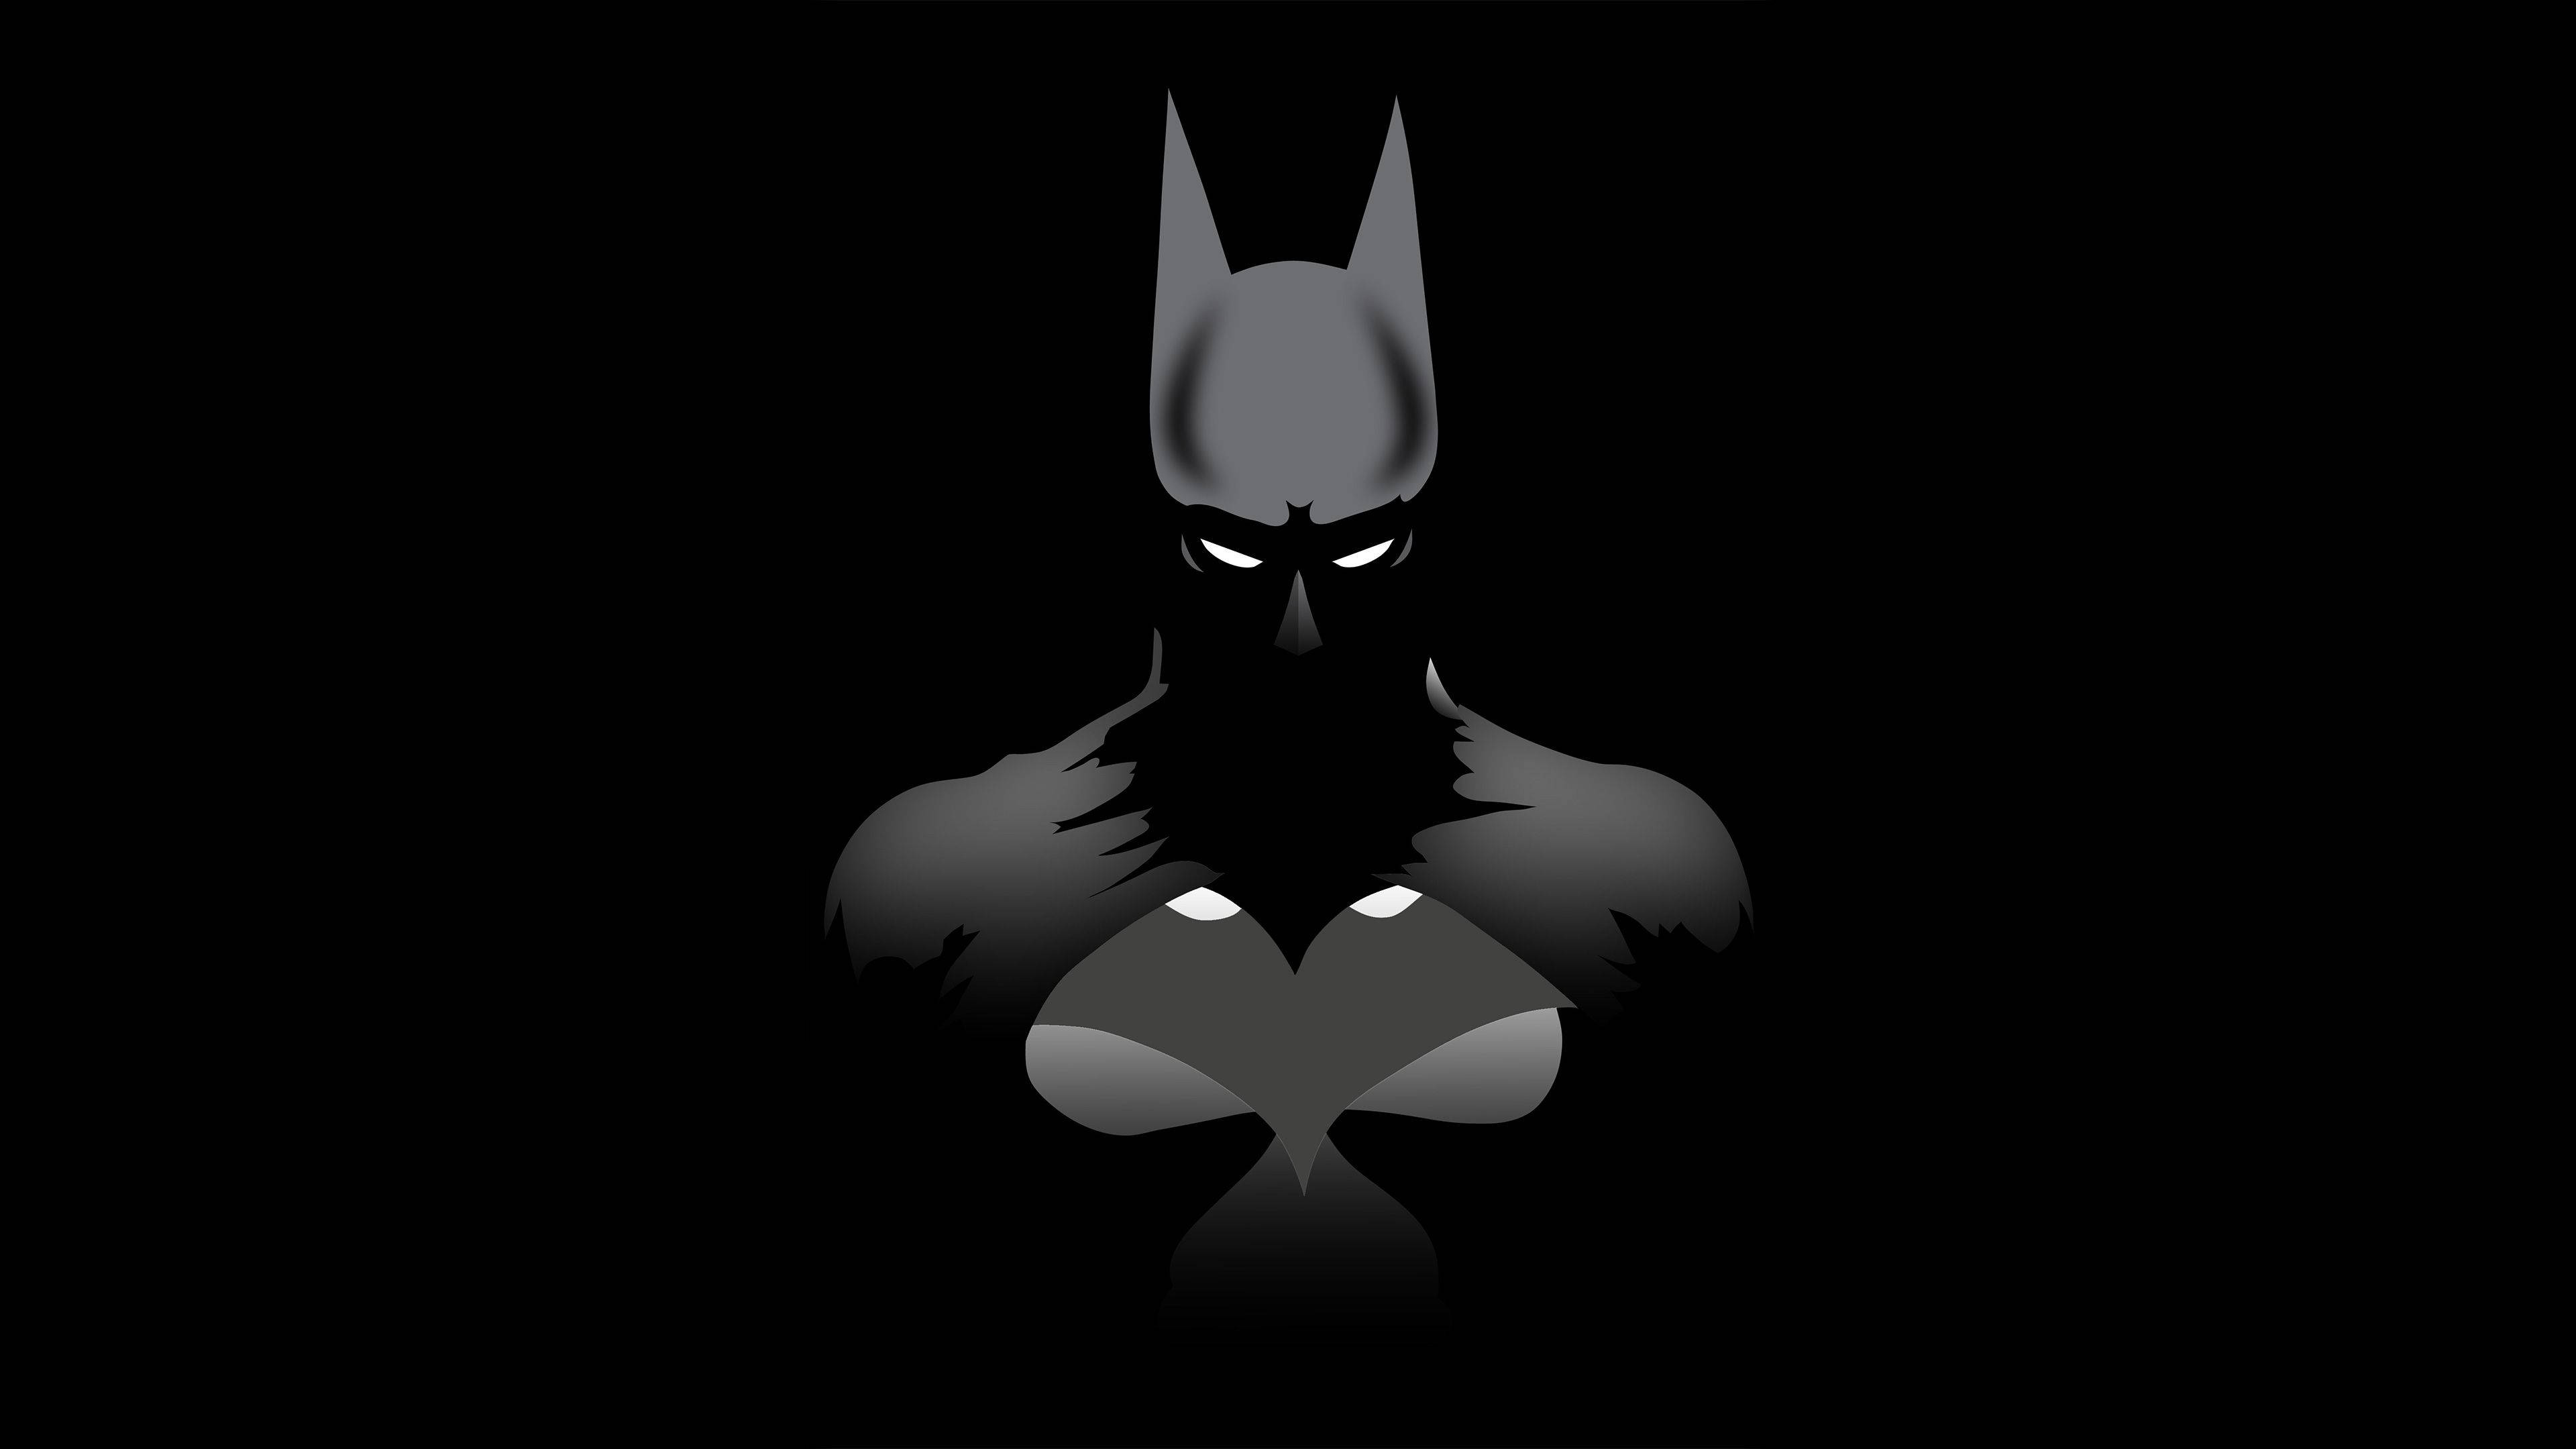 Batman black. Бэтмен на черном фоне. Бэтмен на темном фоне. Черный Бэтмен. Бэтмен Минимализм.